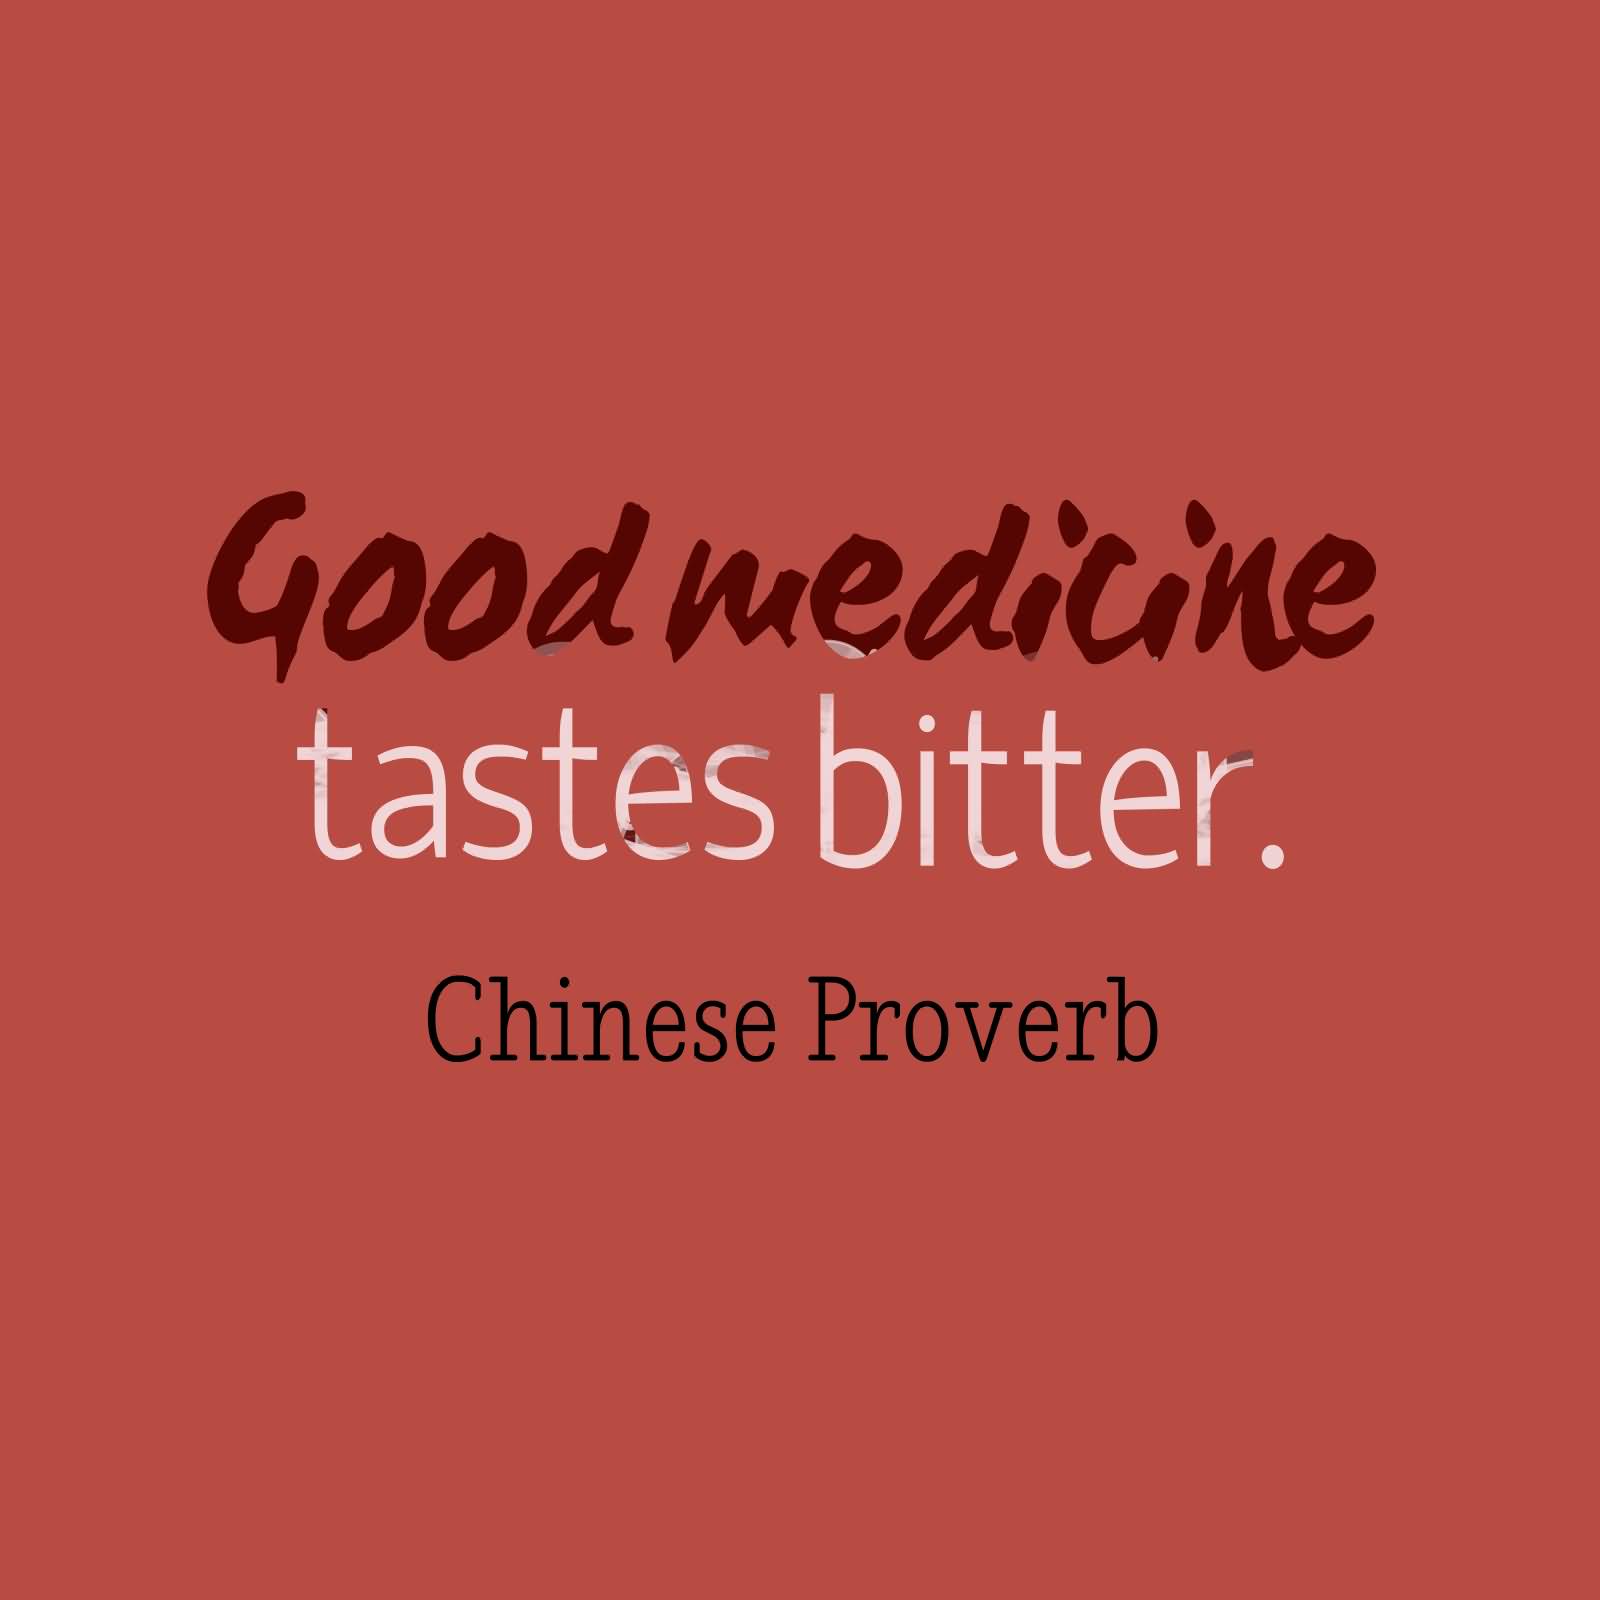 Good medicine tastes bitter